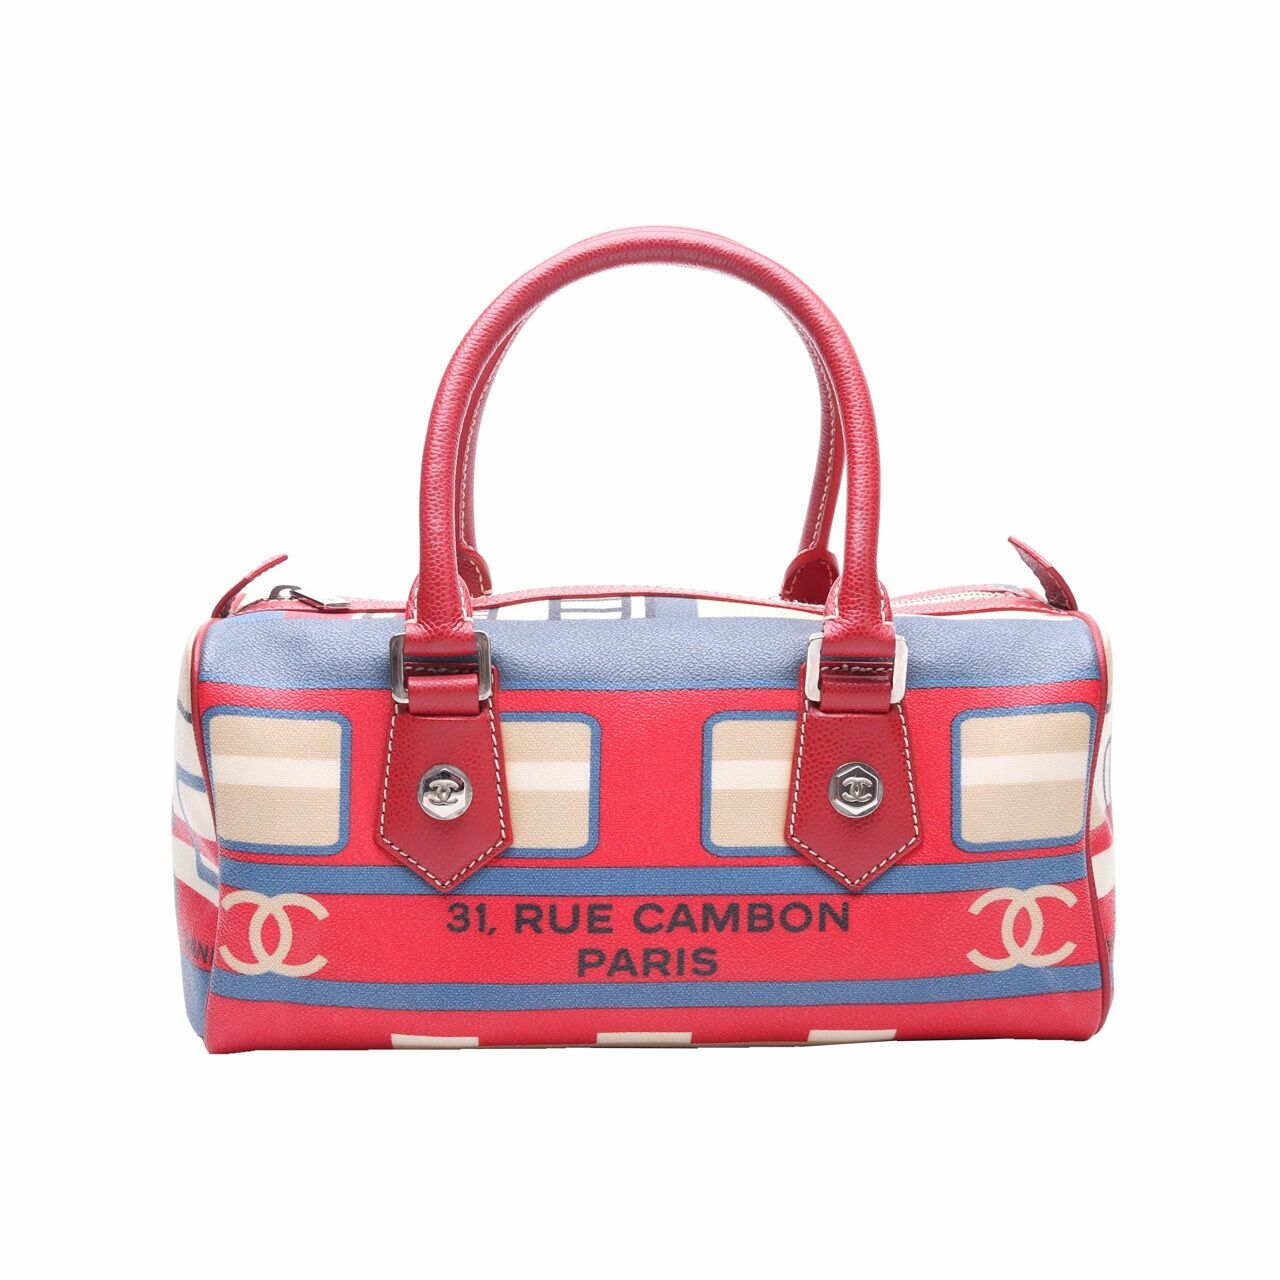 Chanel Le Train 31 Rue Cambon Paris Red Multi Pattern Hand Bag